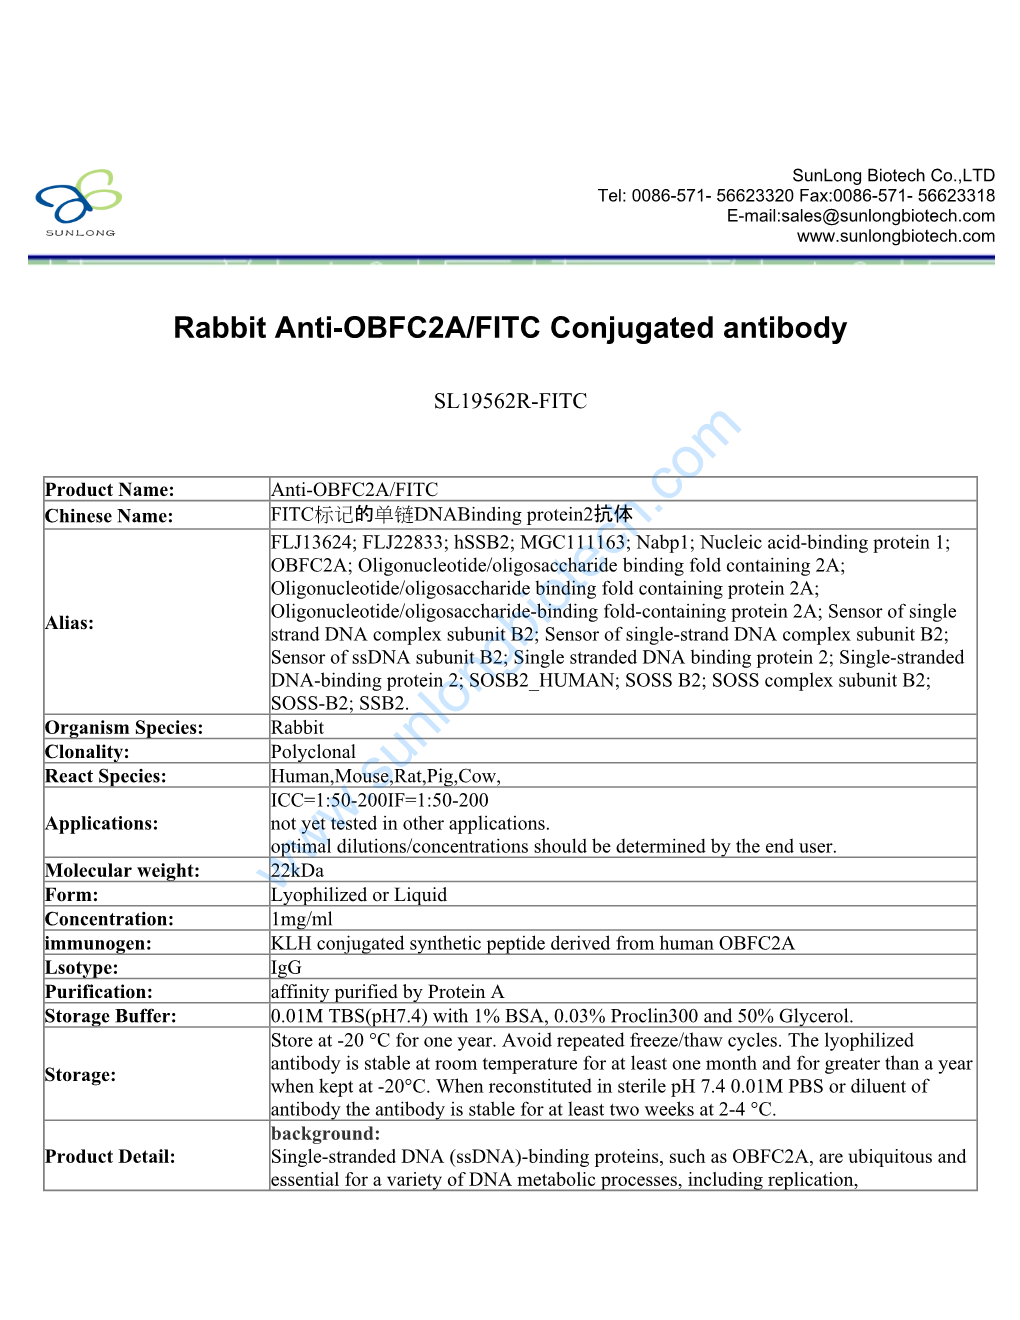 Rabbit Anti-OBFC2A/FITC Conjugated Antibody-SL19562R-FITC